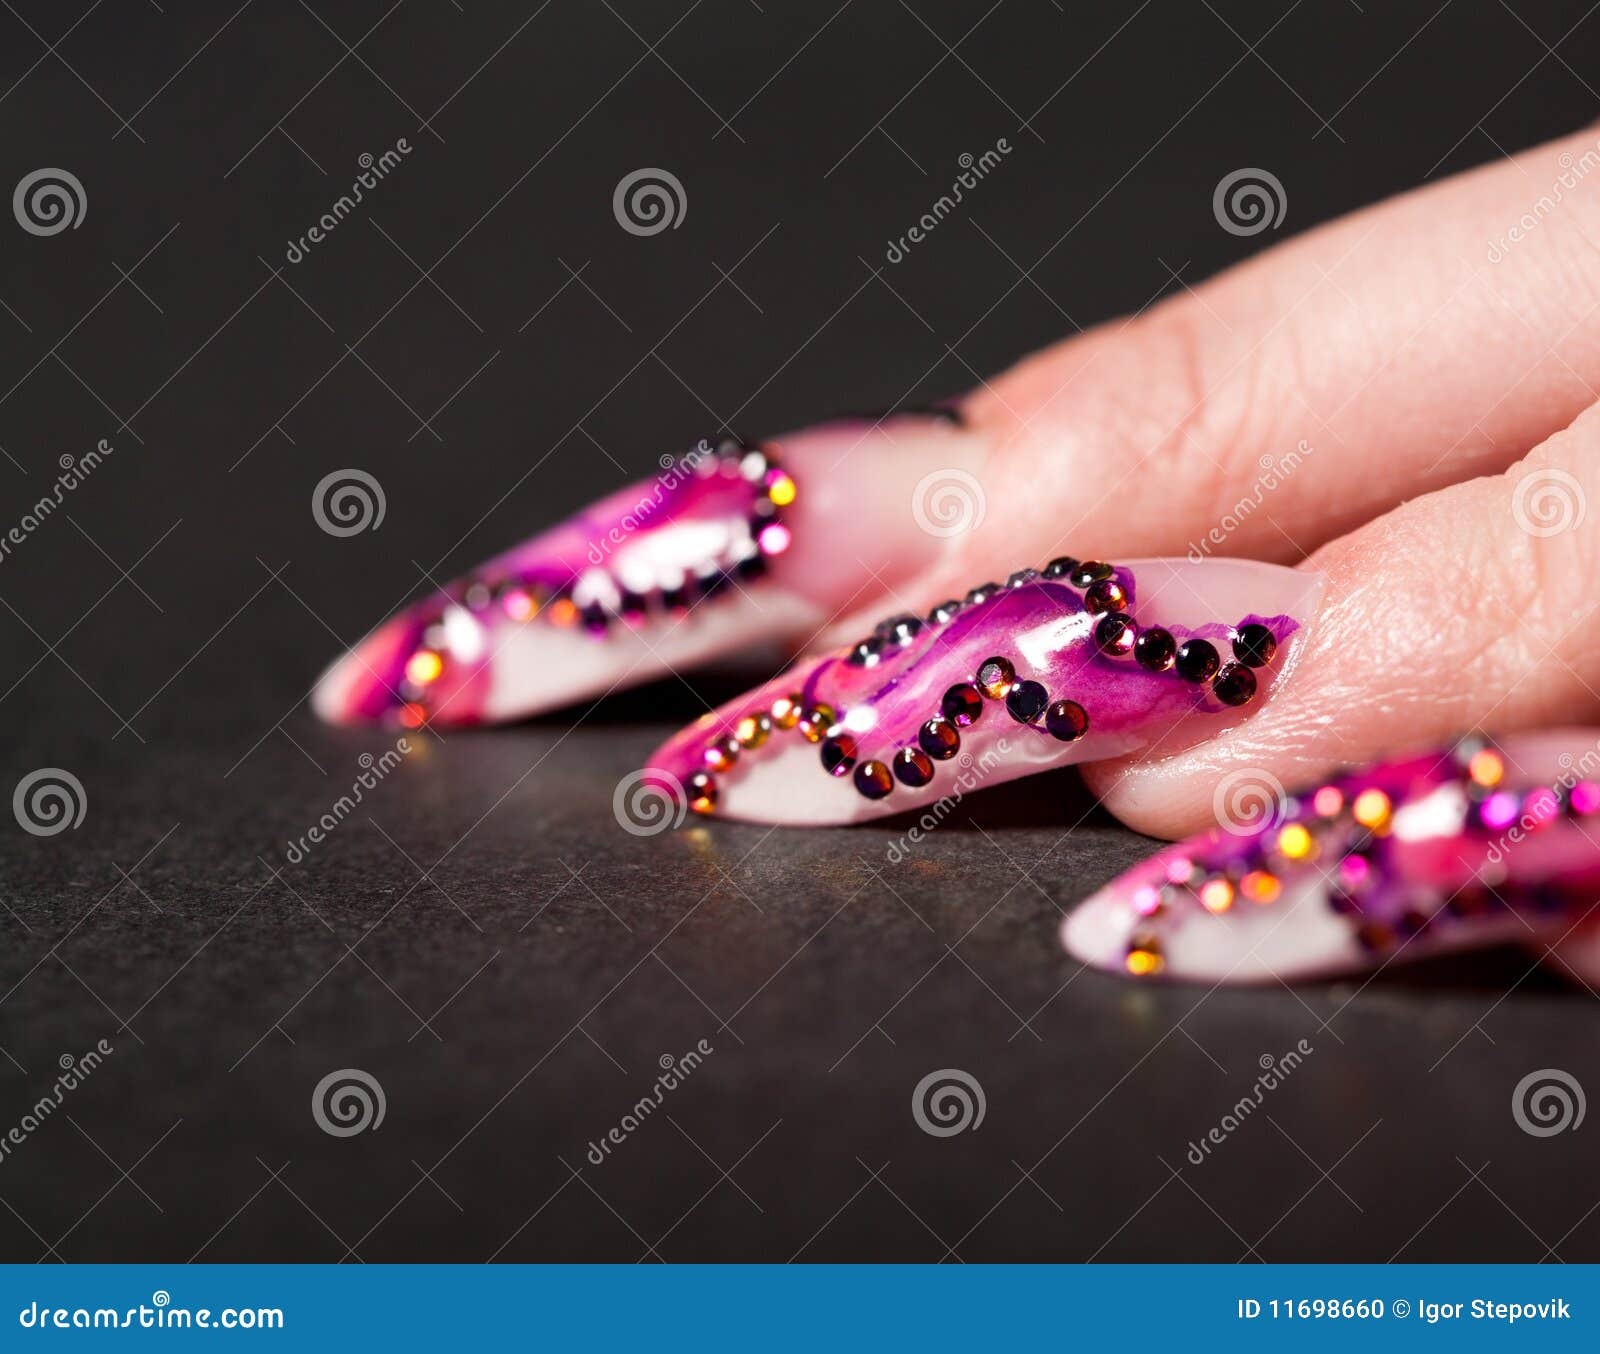 human fingers with long fingernail